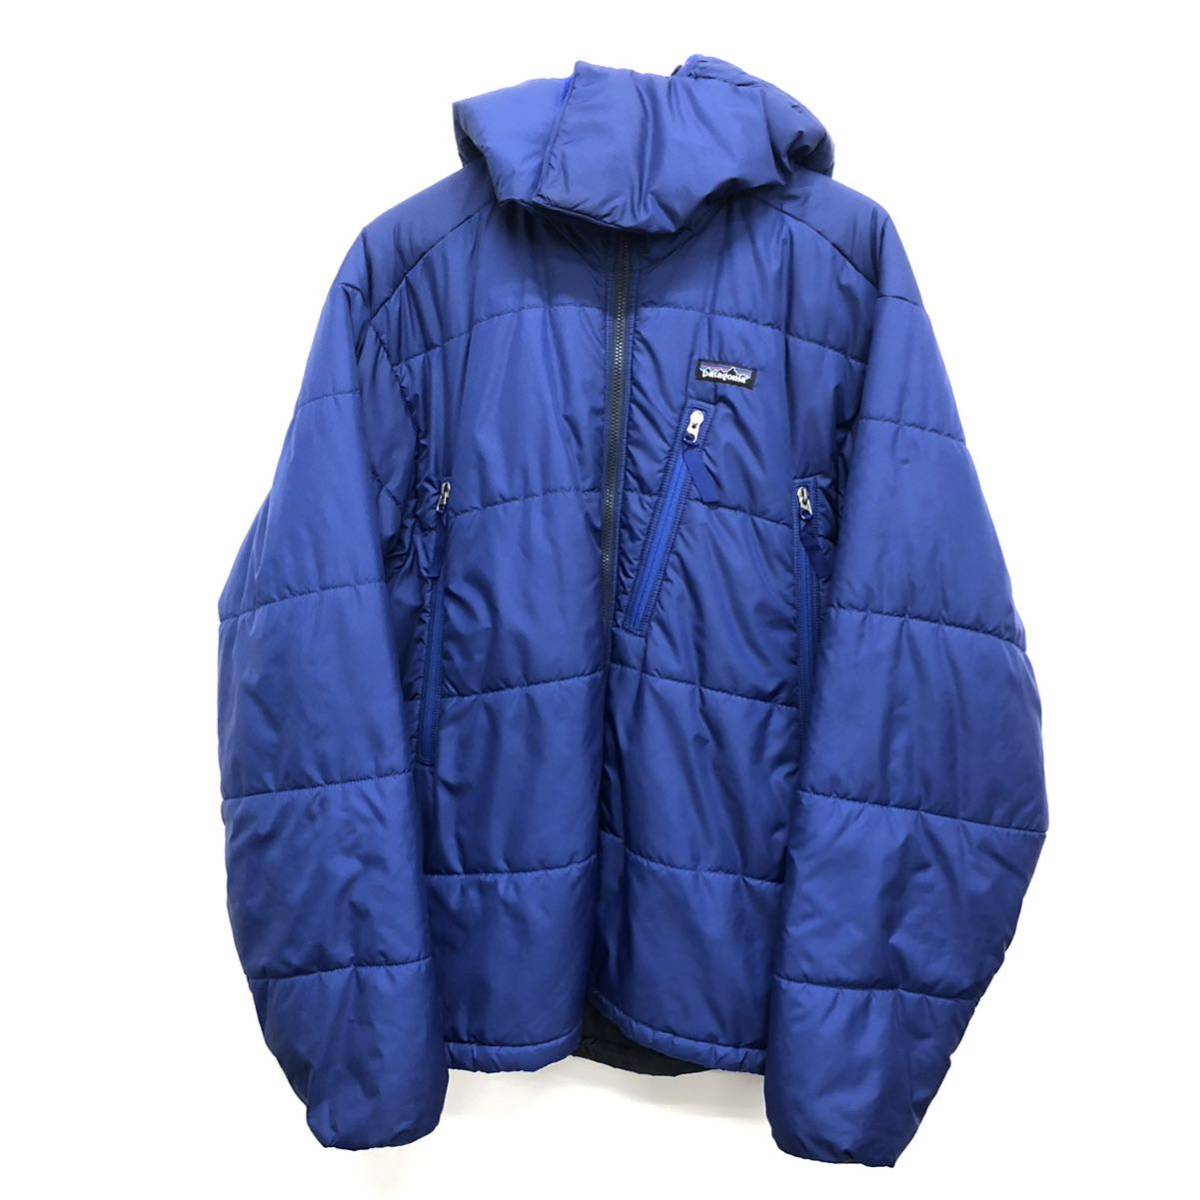 【patagonia】パタゴニア★中綿ジャケット PUFF JACKET パフジャケット 2001年製 サイズL 83990 10